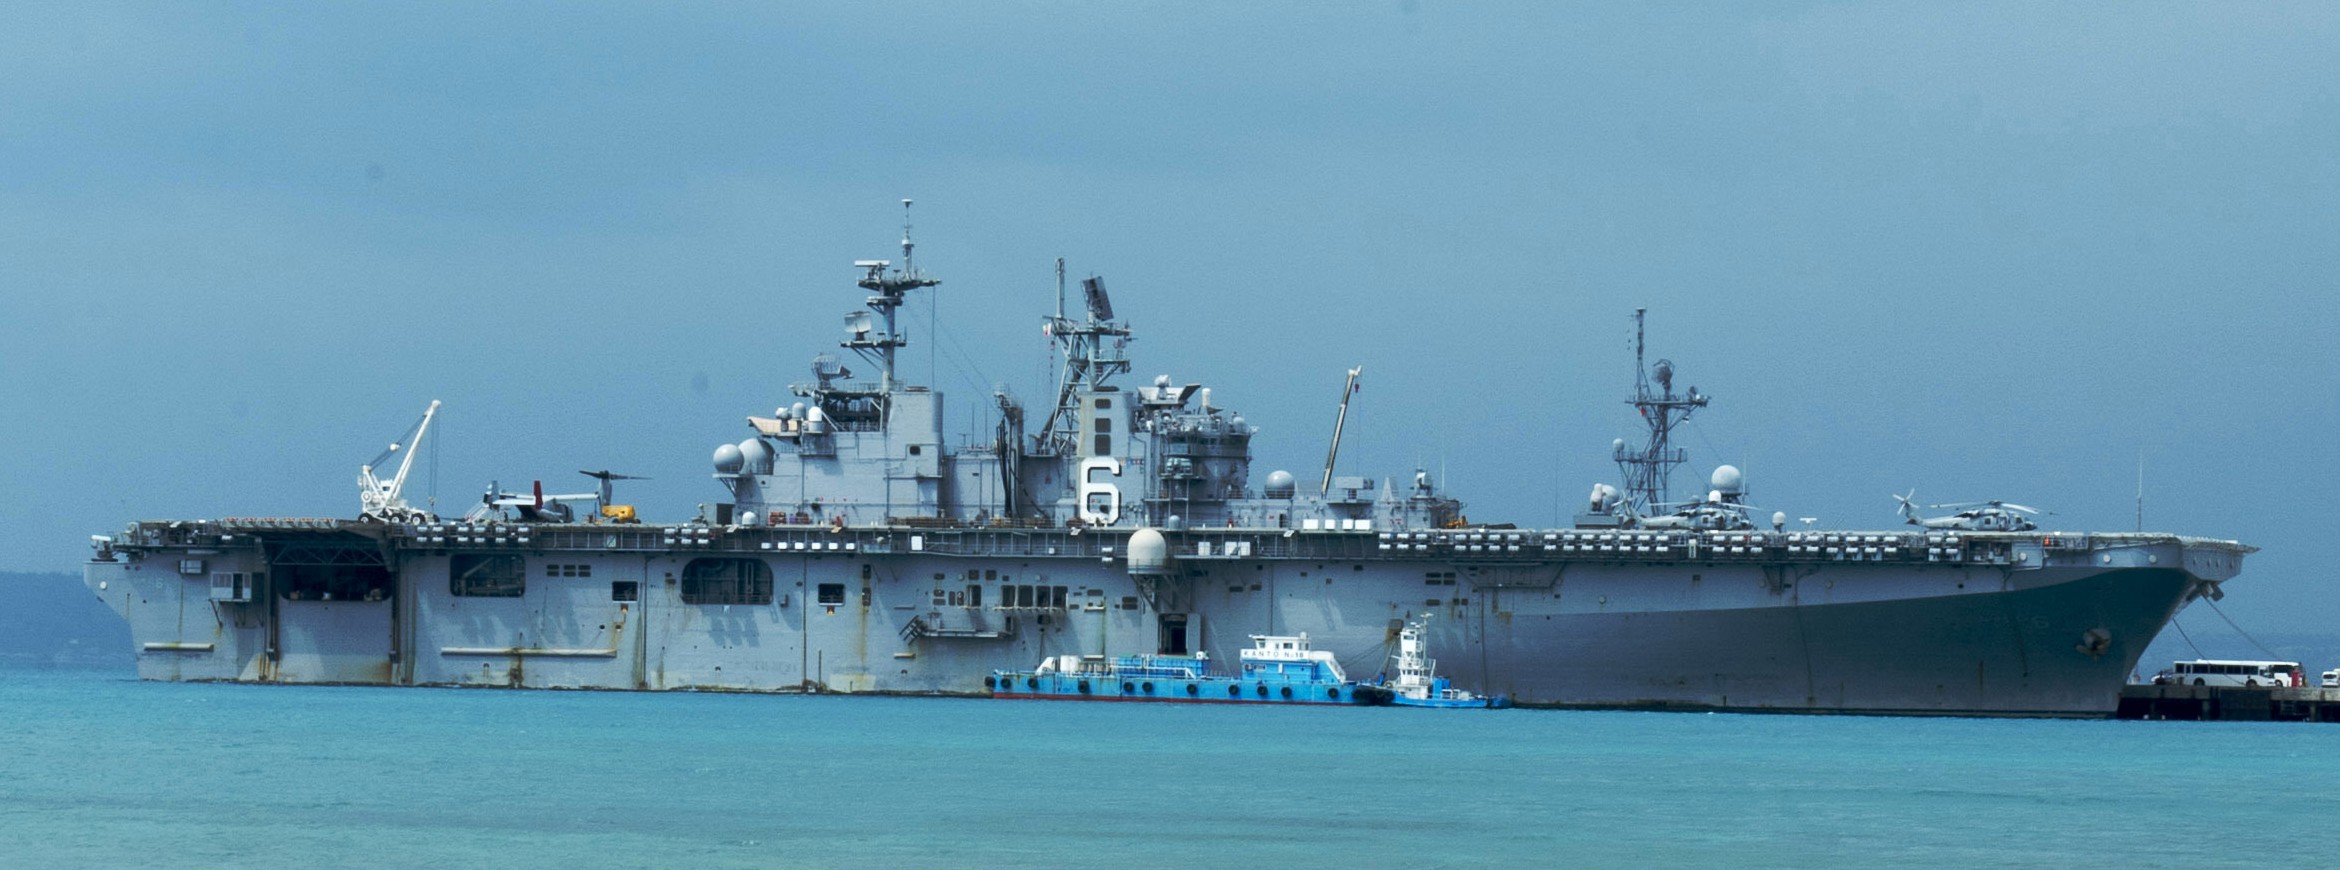 lhd-6 uss bonhomme richard amphibious assault ship landing helicopter dock wasp class us navy white beach naval facility okinawa 257